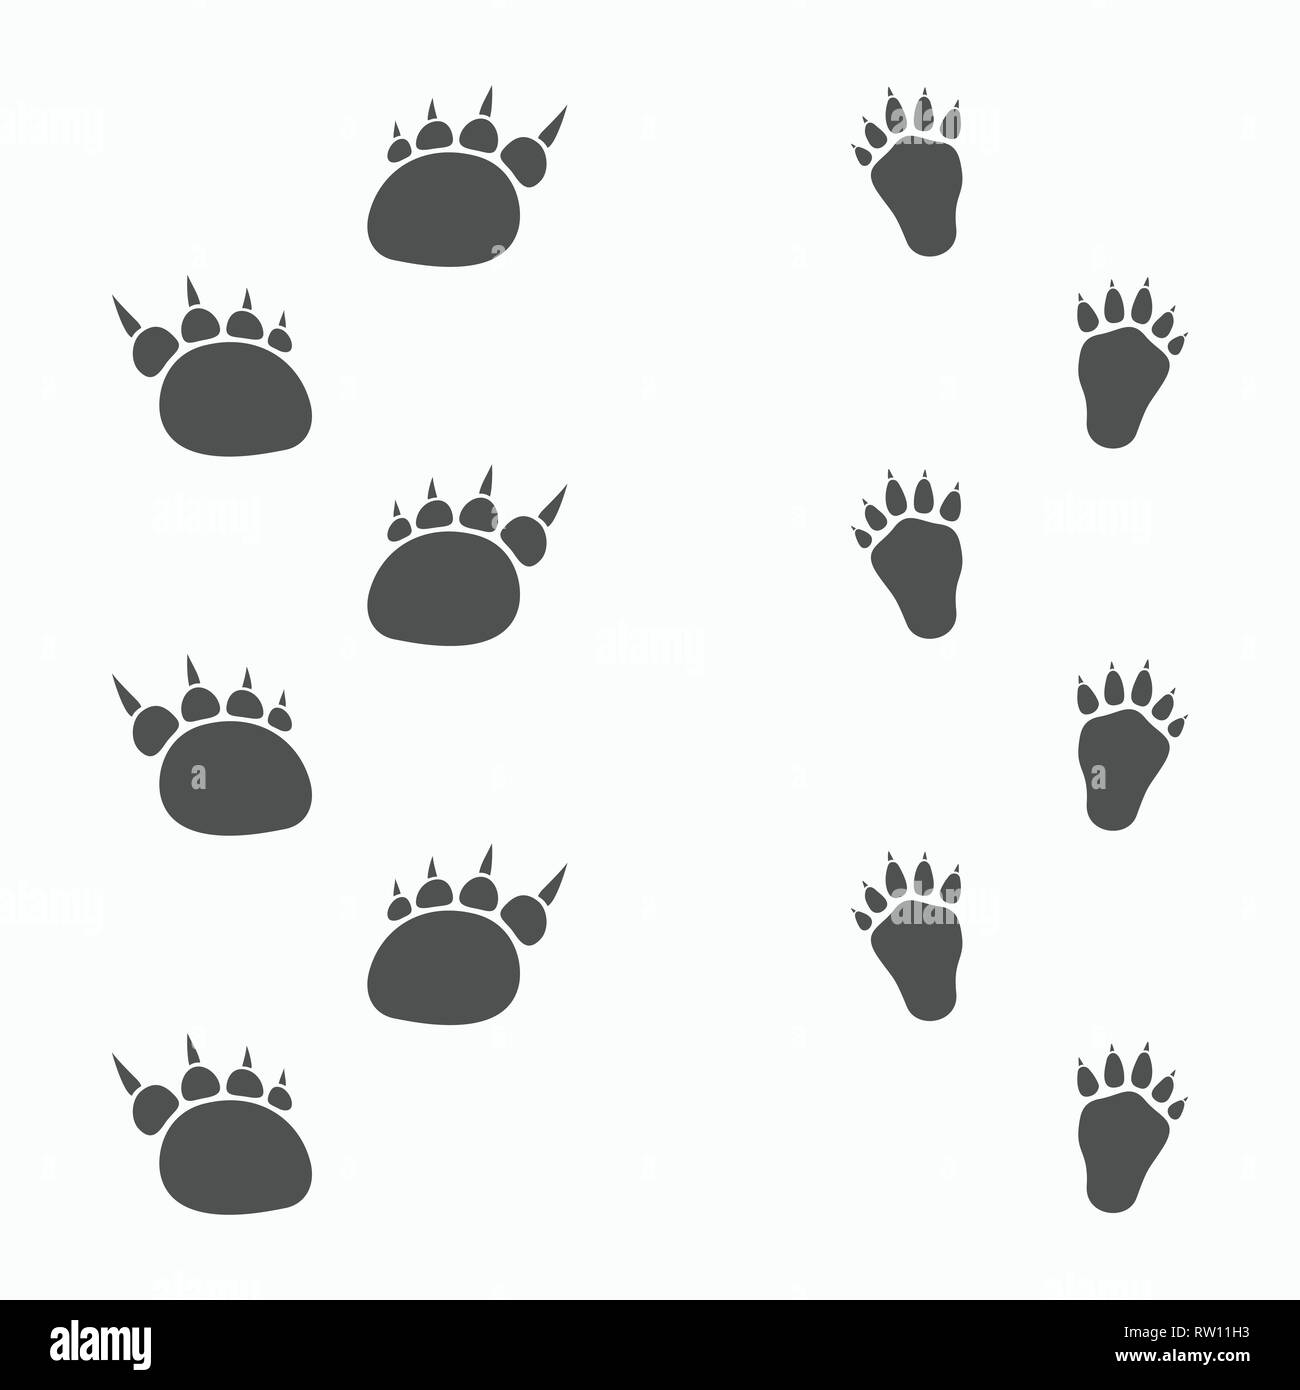 Animals footprints isolated on light background. Vector illustration. Stock Vector